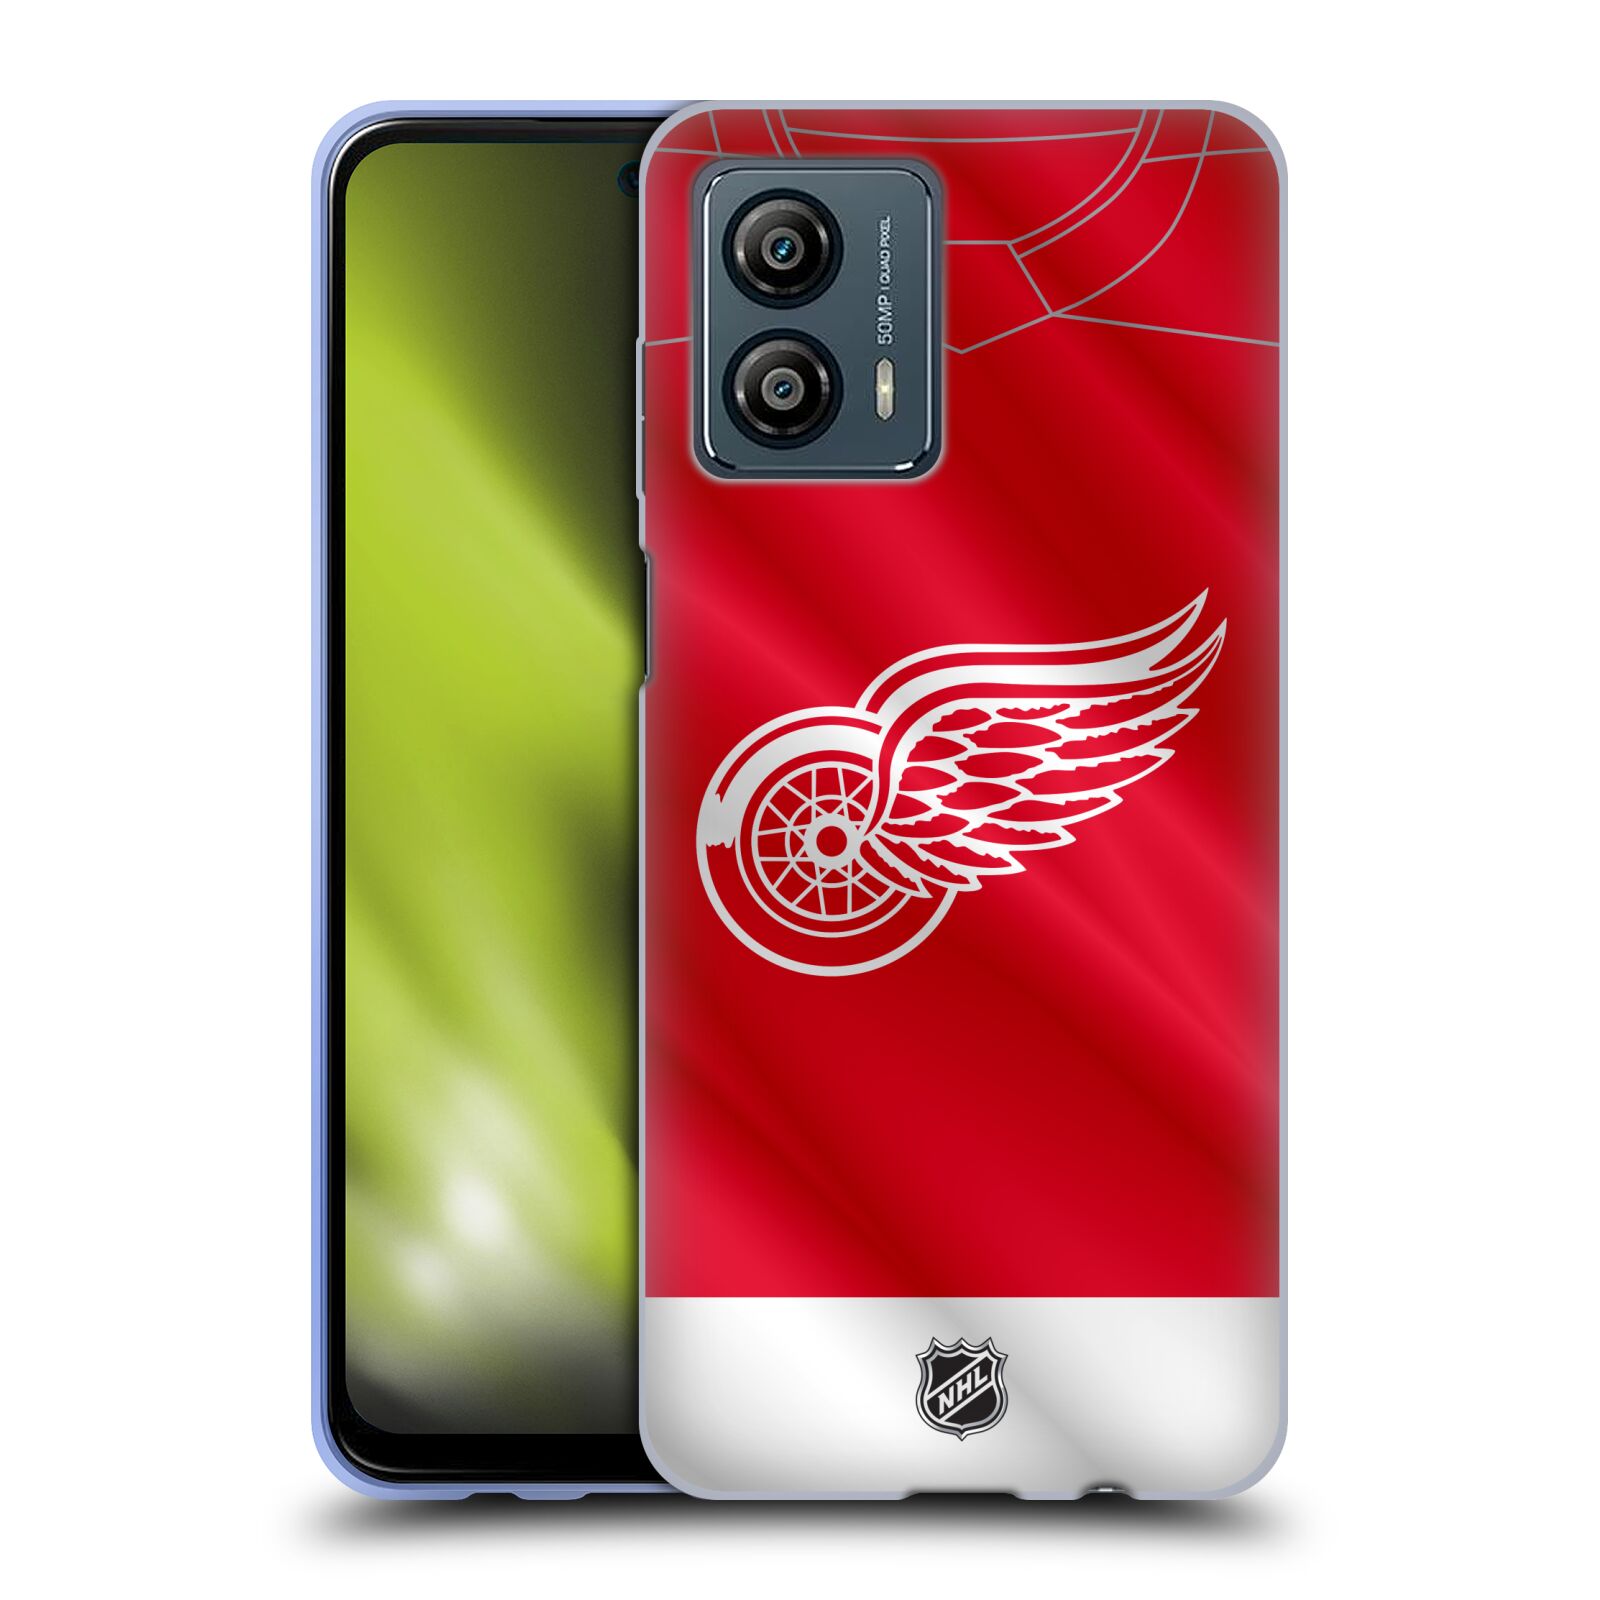 Silikonové pouzdro na mobil Motorola Moto G53 5G - NHL - Dres Detroit Red Wings (Silikonový kryt, obal, pouzdro na mobilní telefon Motorola Moto G53 5G s licencovaným motivem NHL - Dres Detroit Red Wings)